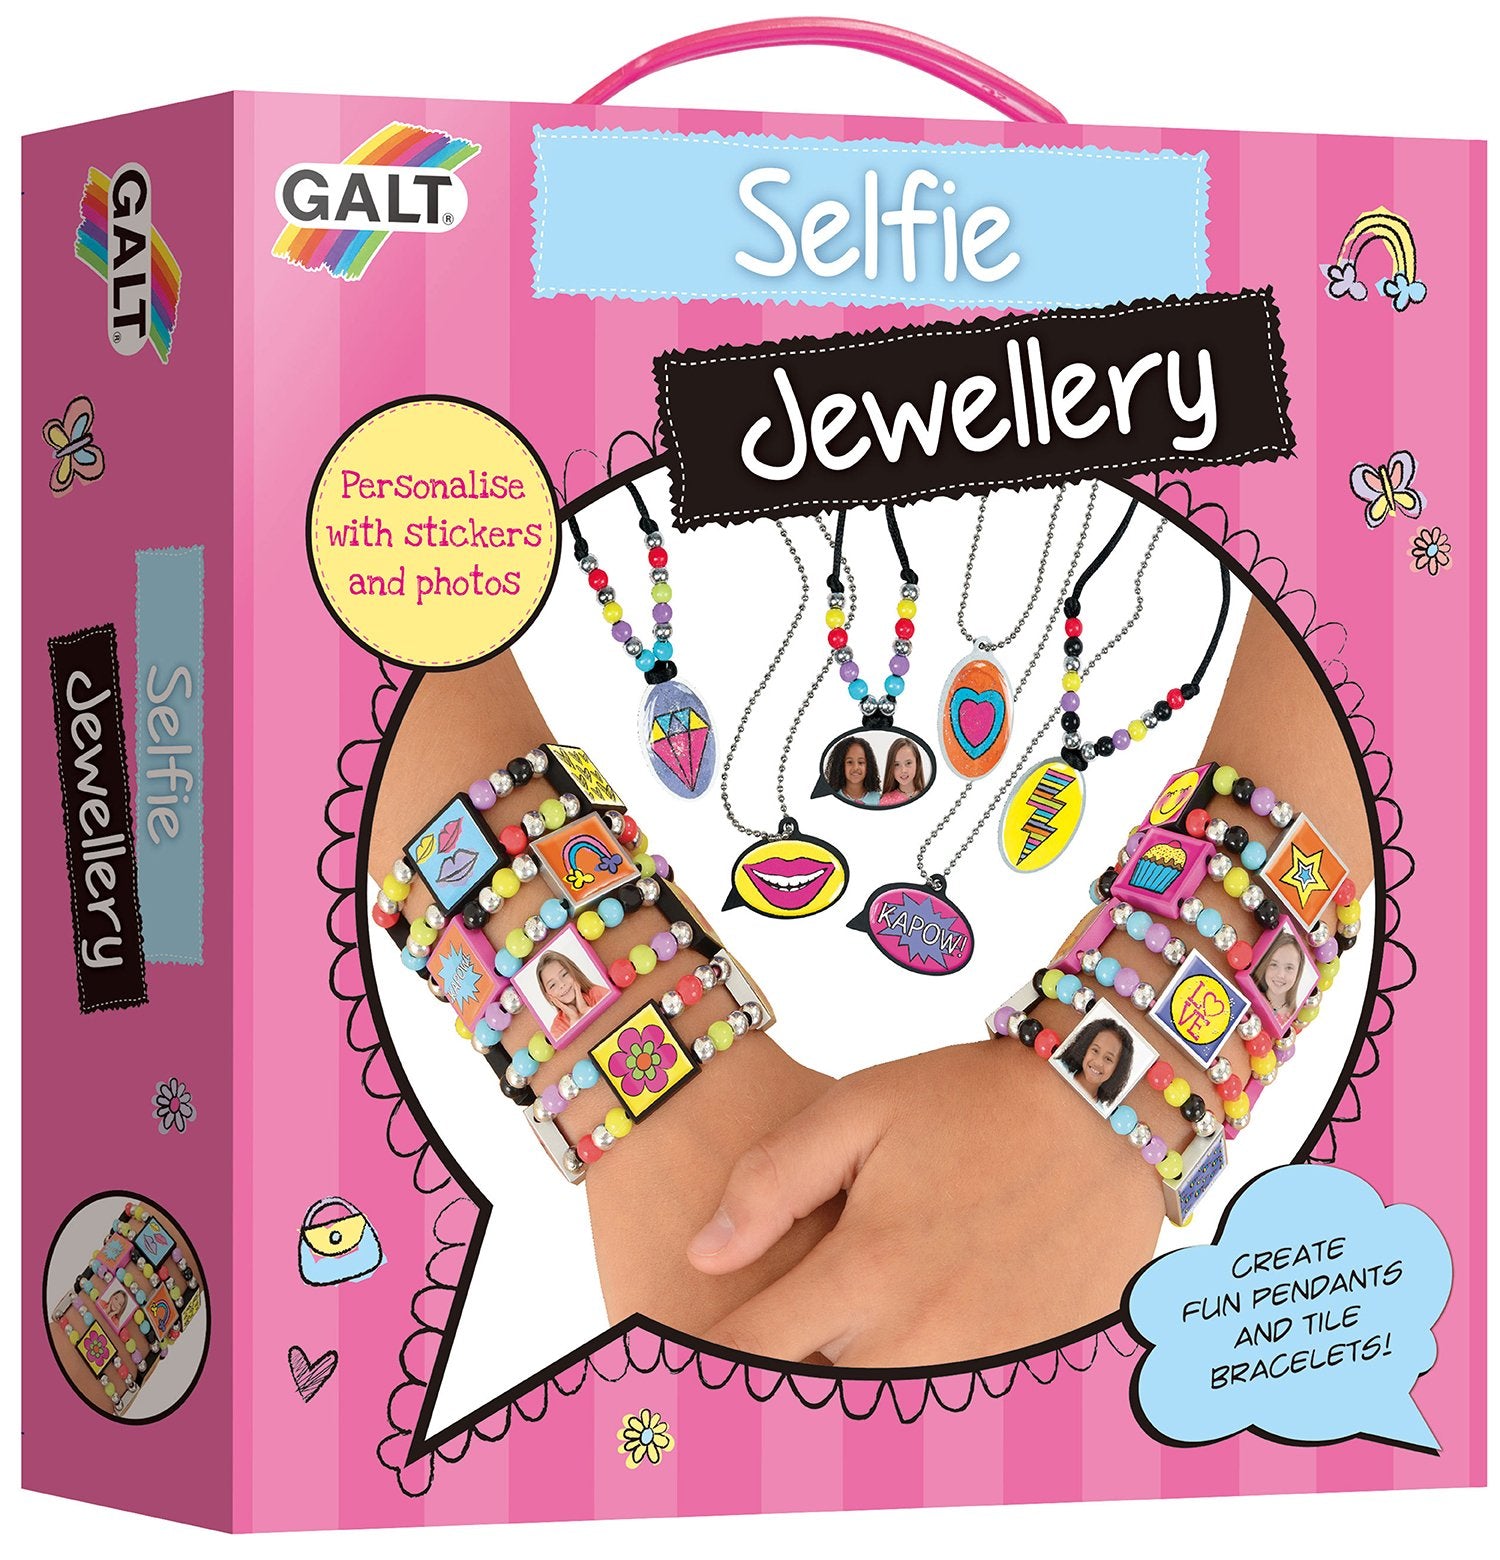 Selfie Jewellery - Galt